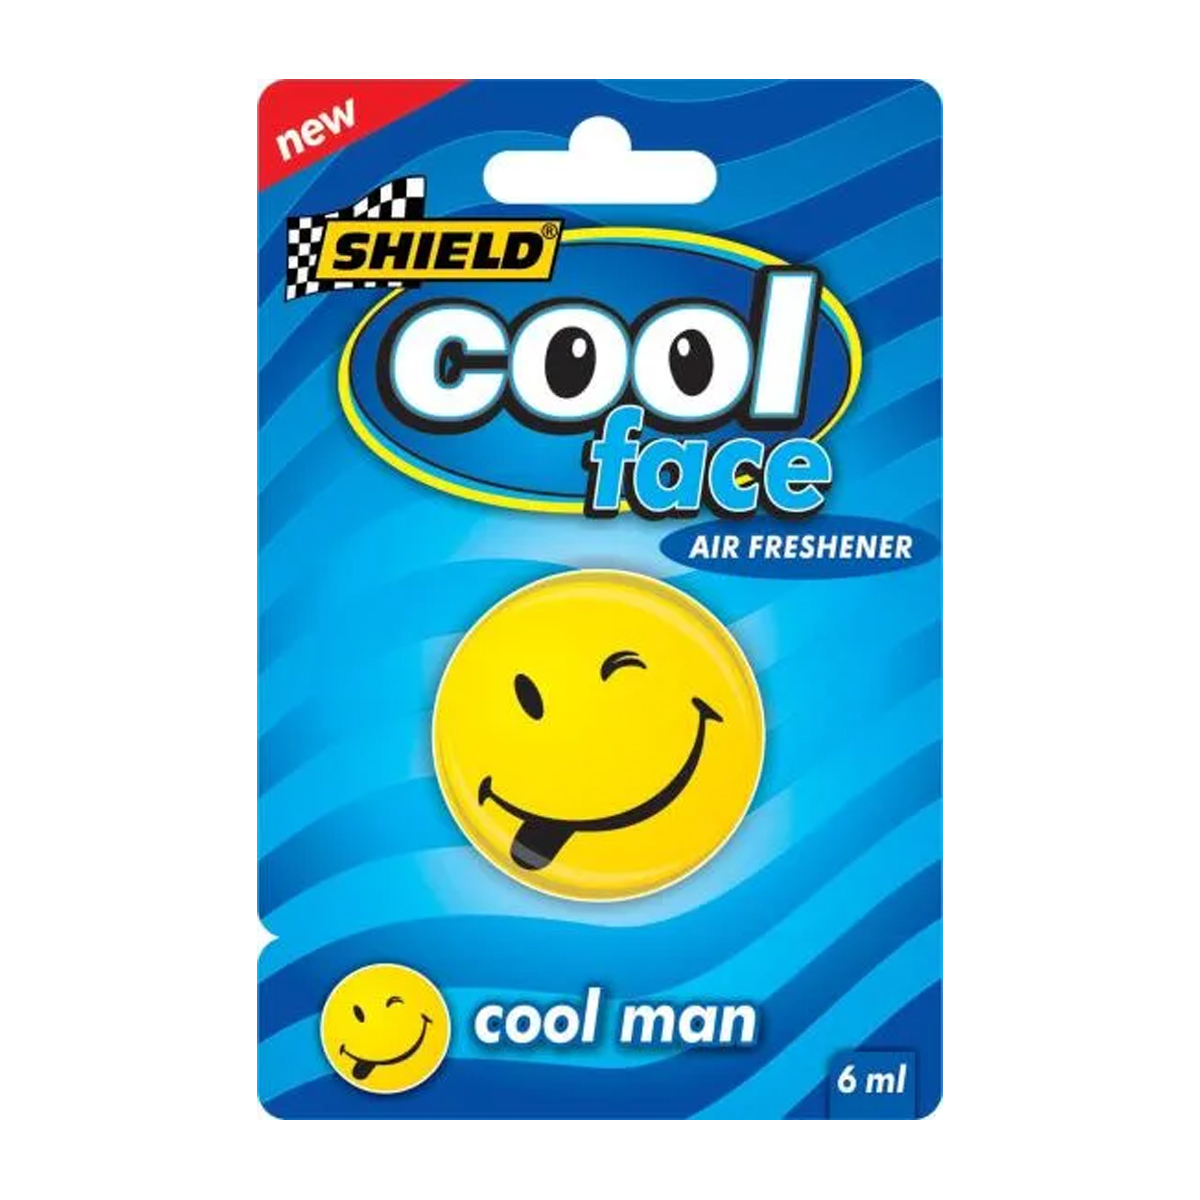 Shield Cool Face Freshener Cool Man 6Ml